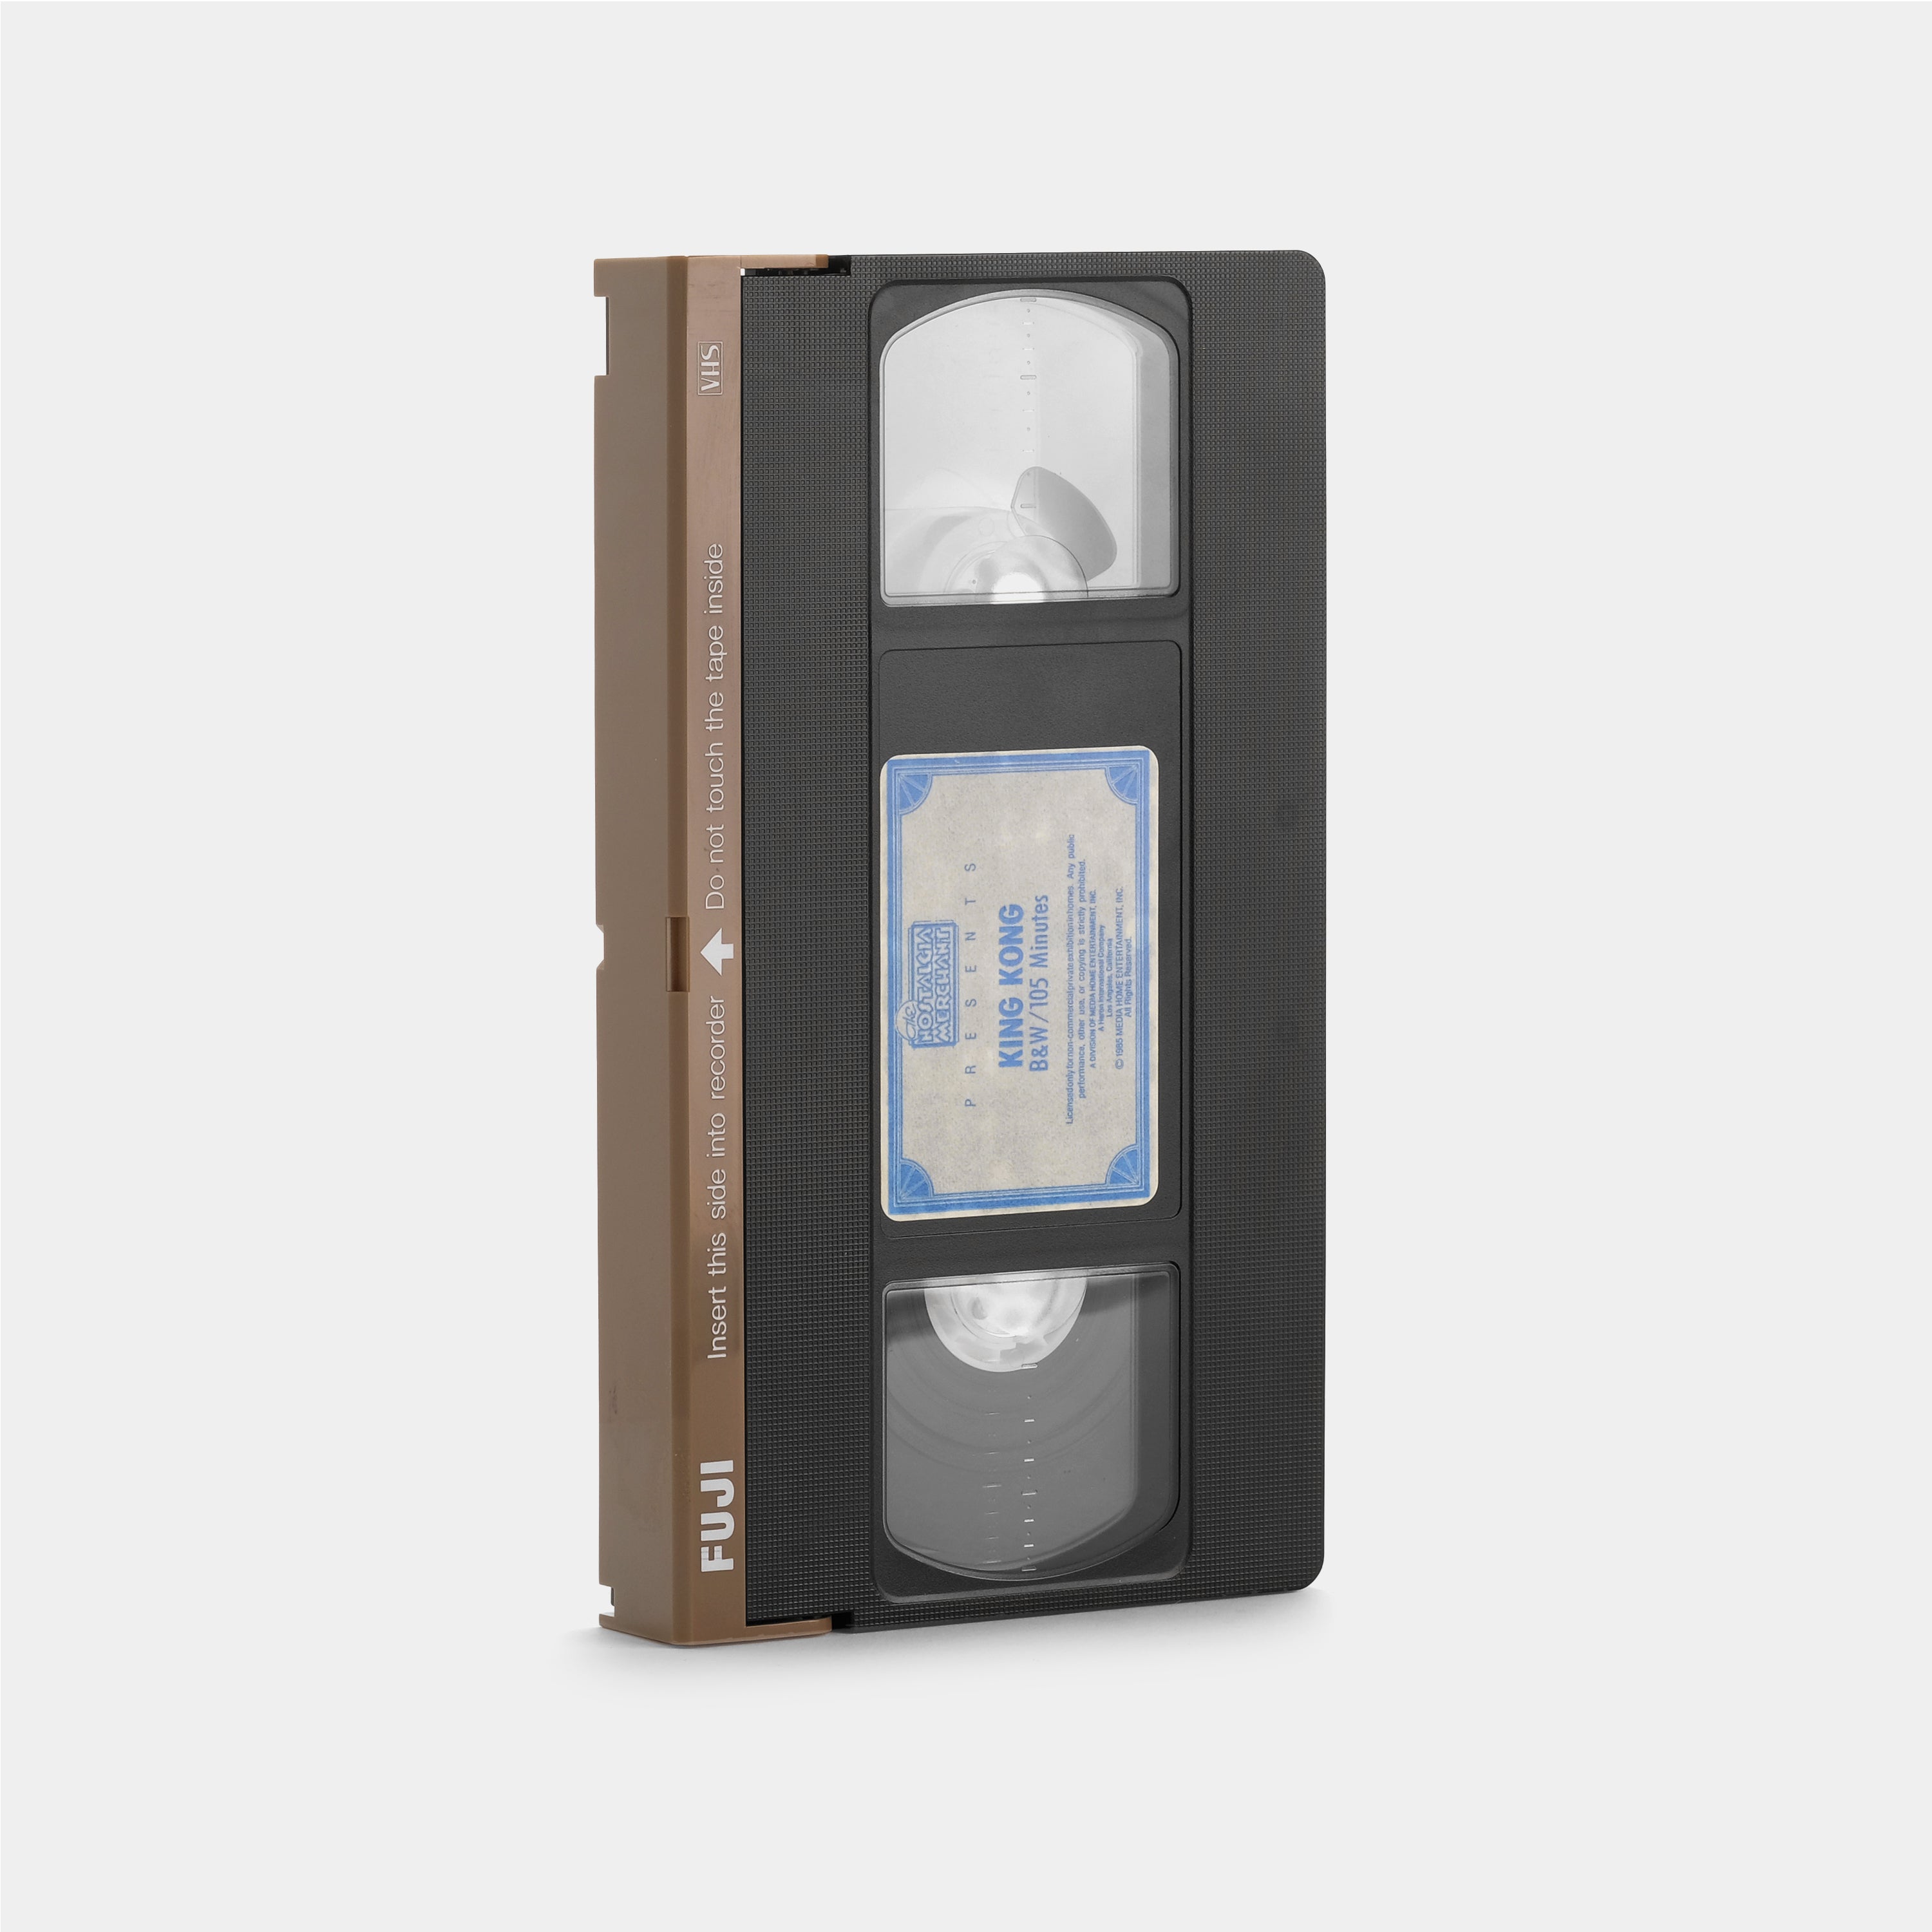 King Kong VHS Tape